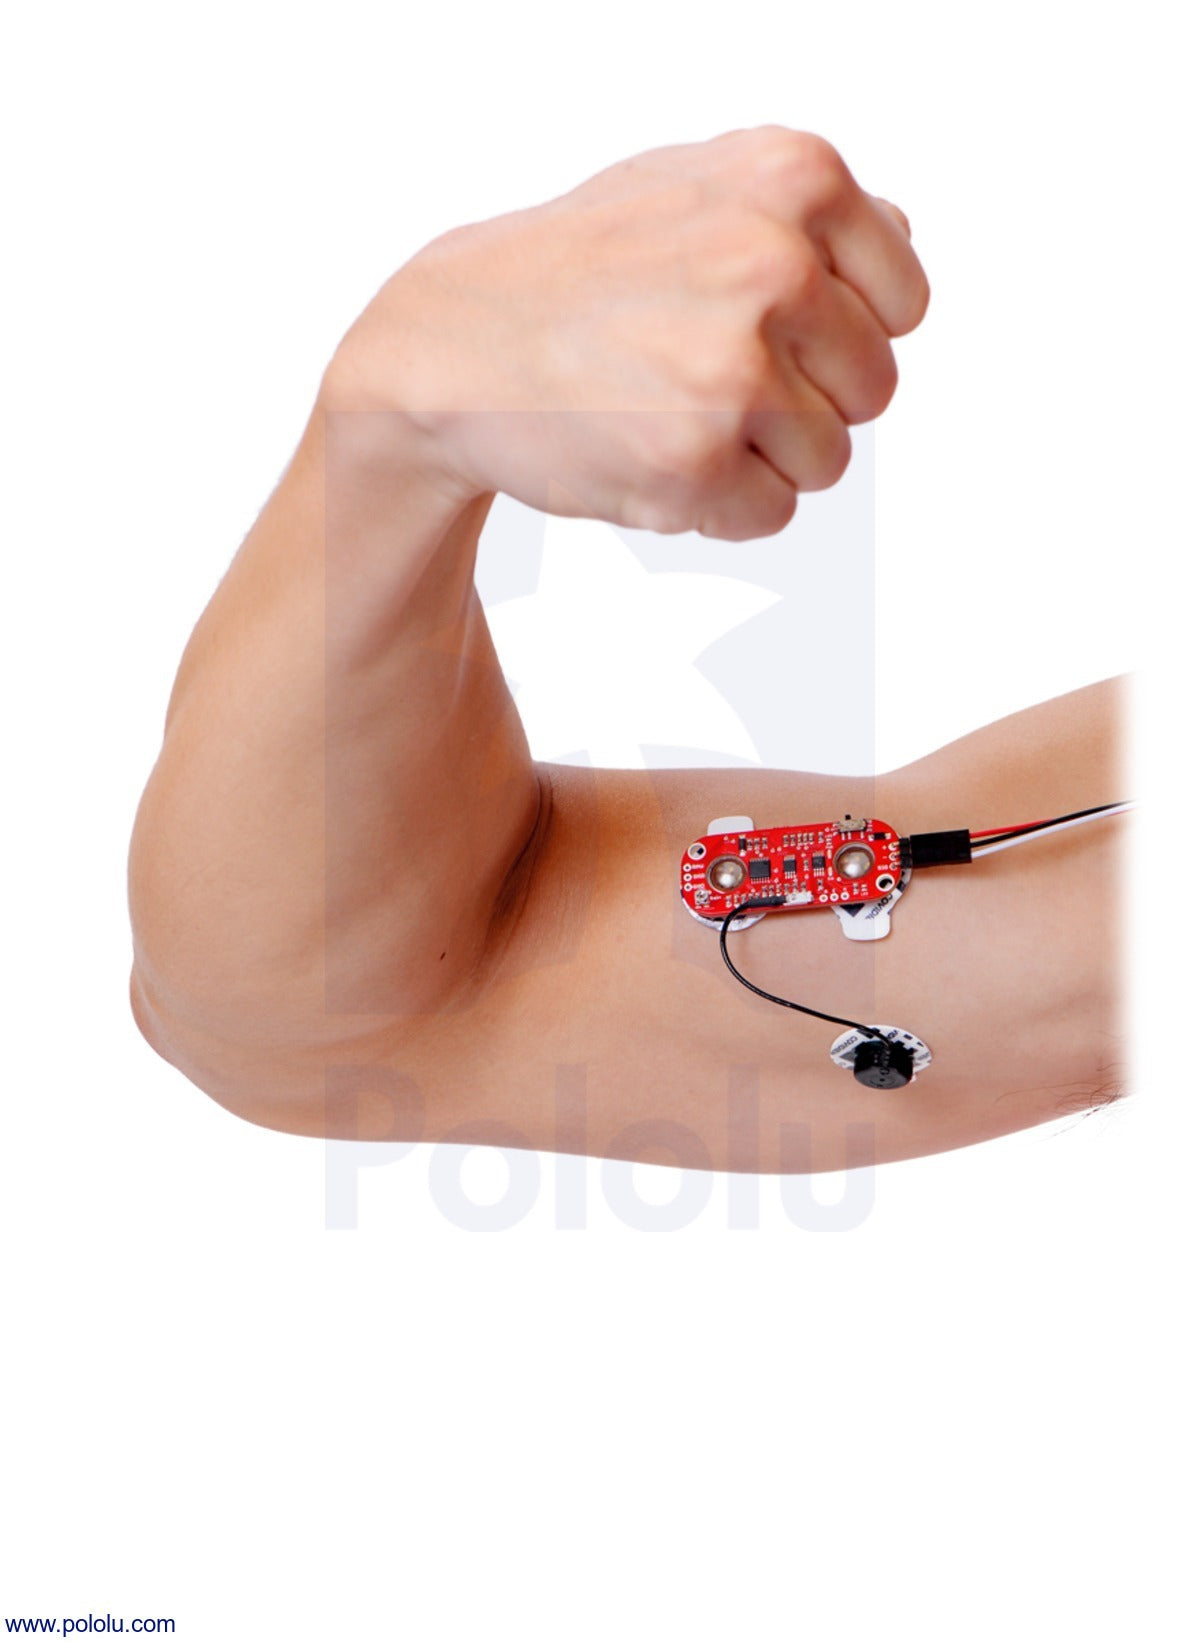 MyoWare Muscle Sensor